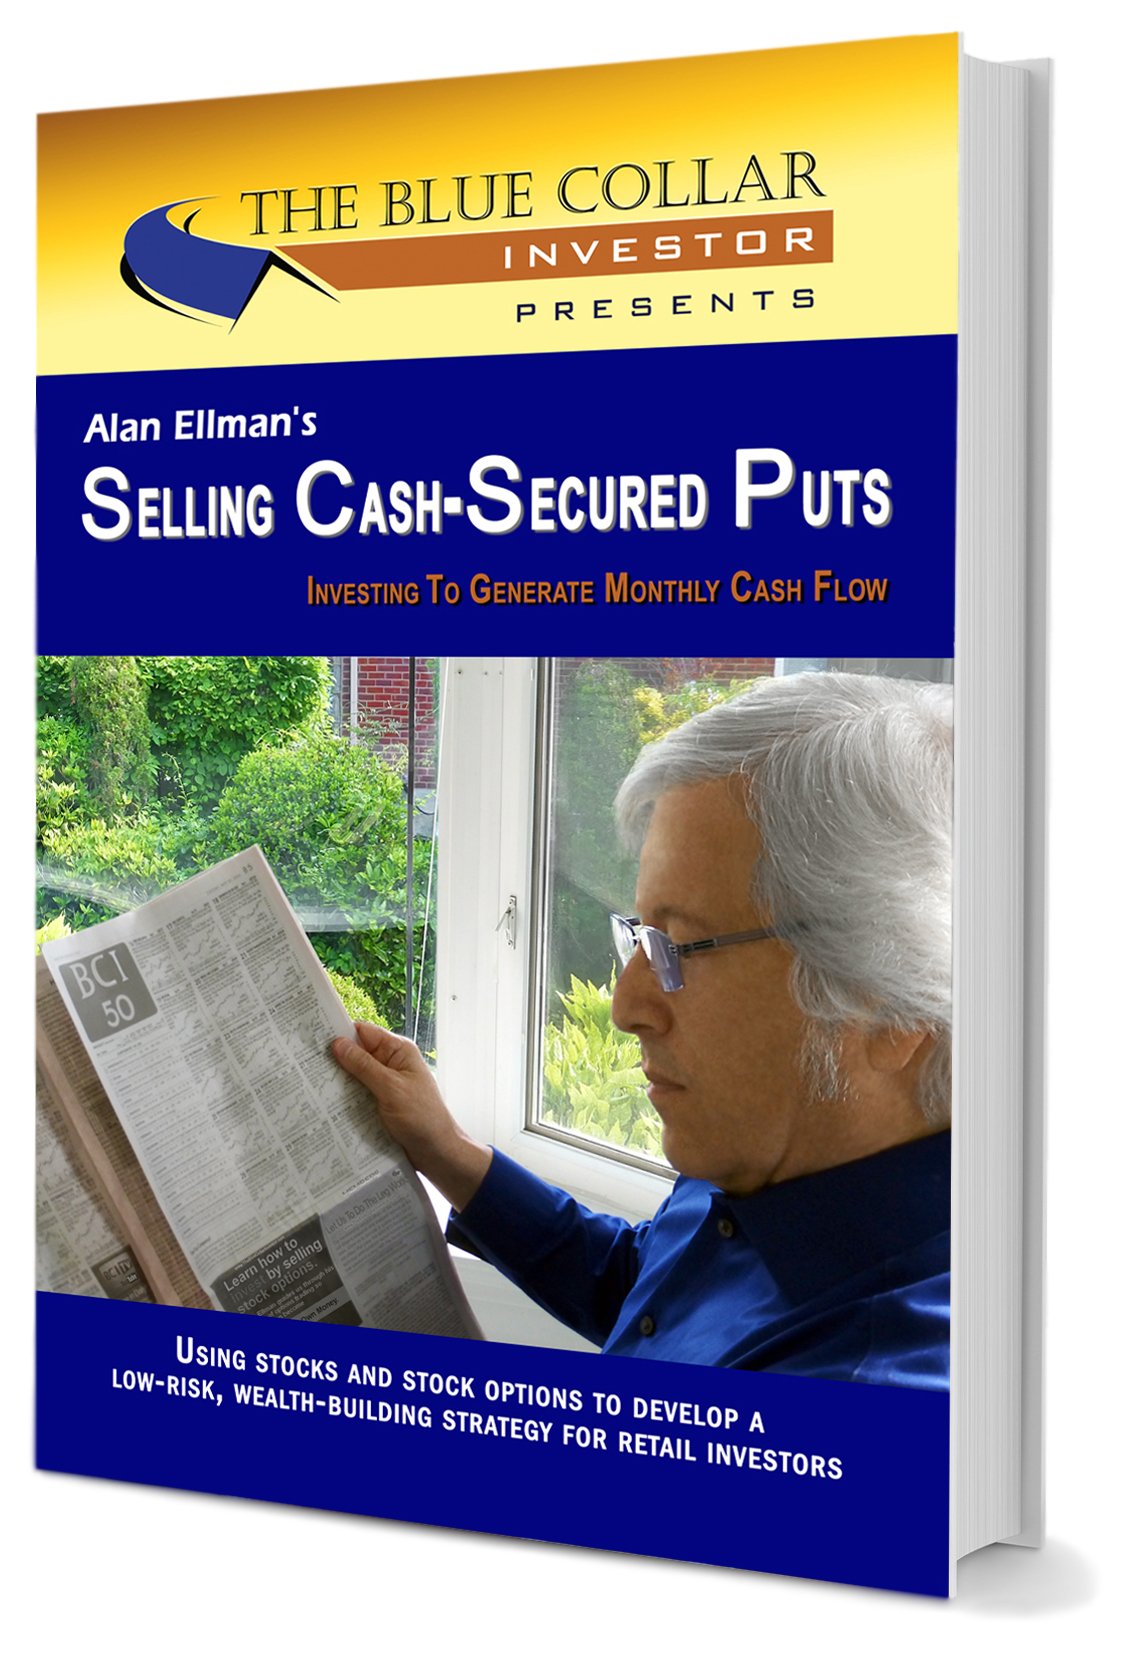 Alan Ellman's Selling Cash-Secured Puts